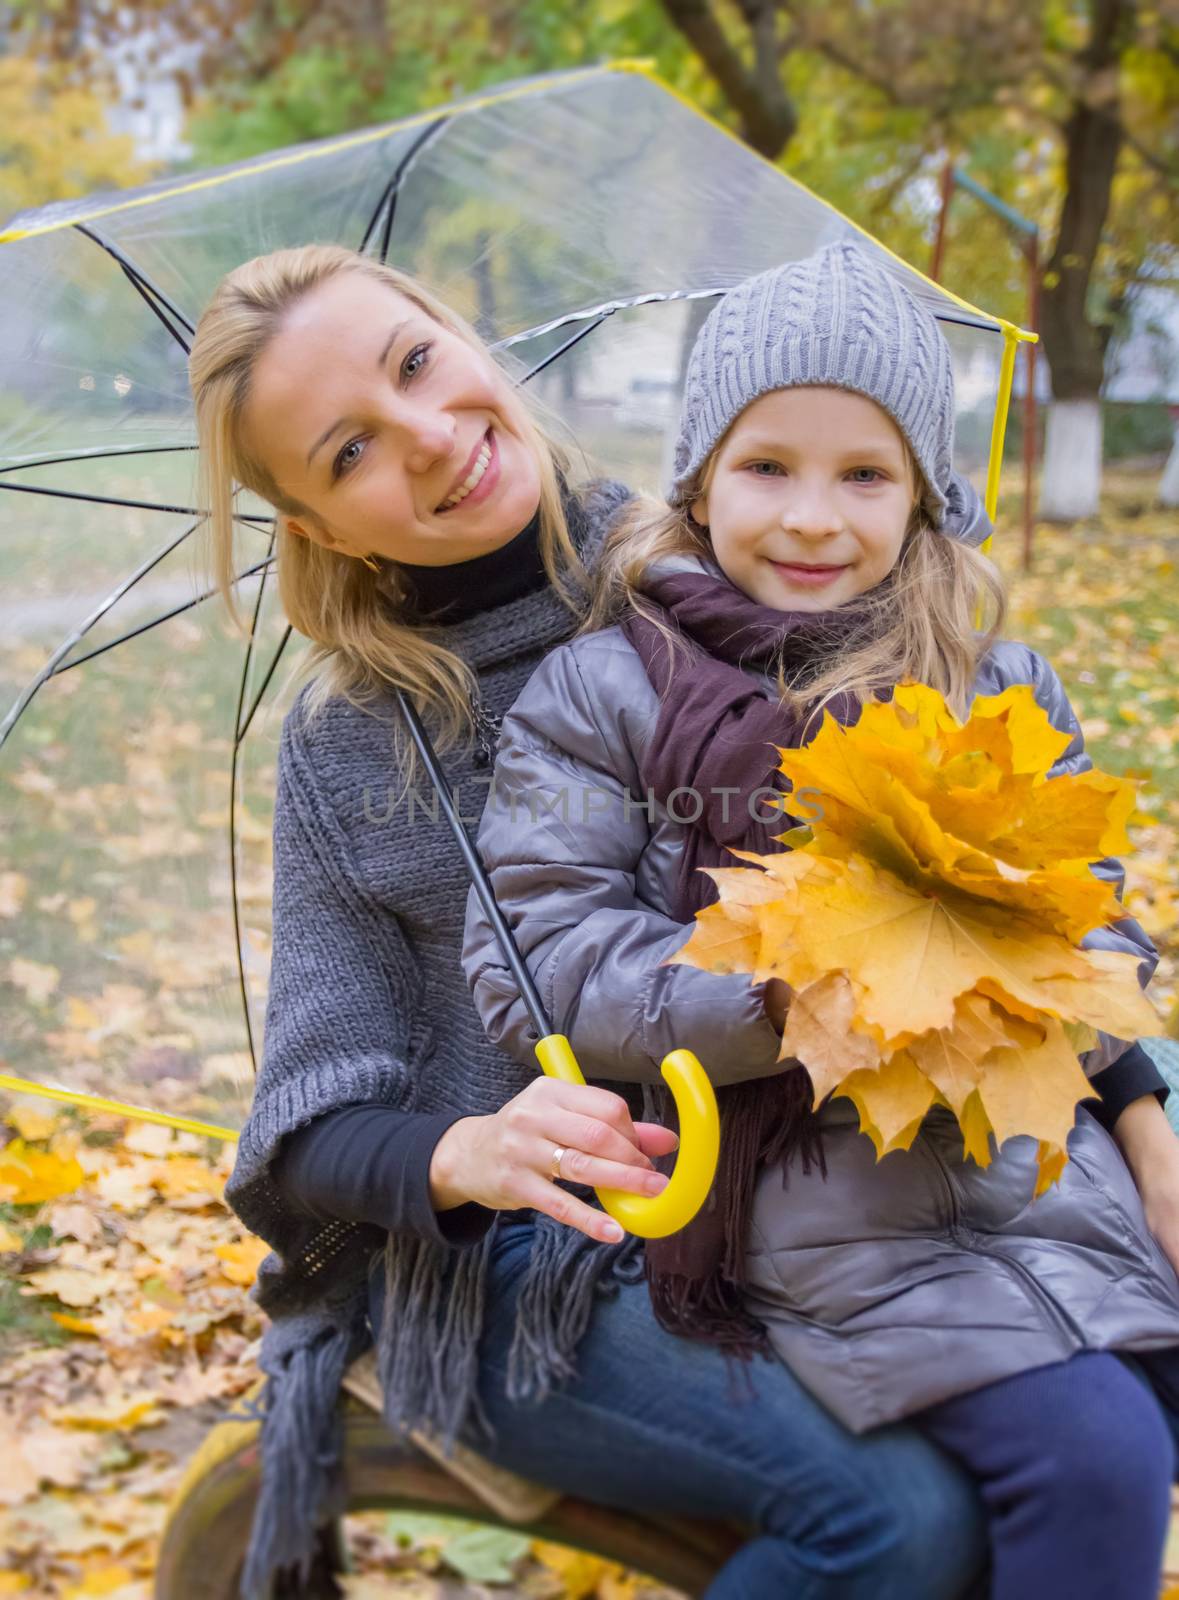 Mother with daughter under umbrella in autumn